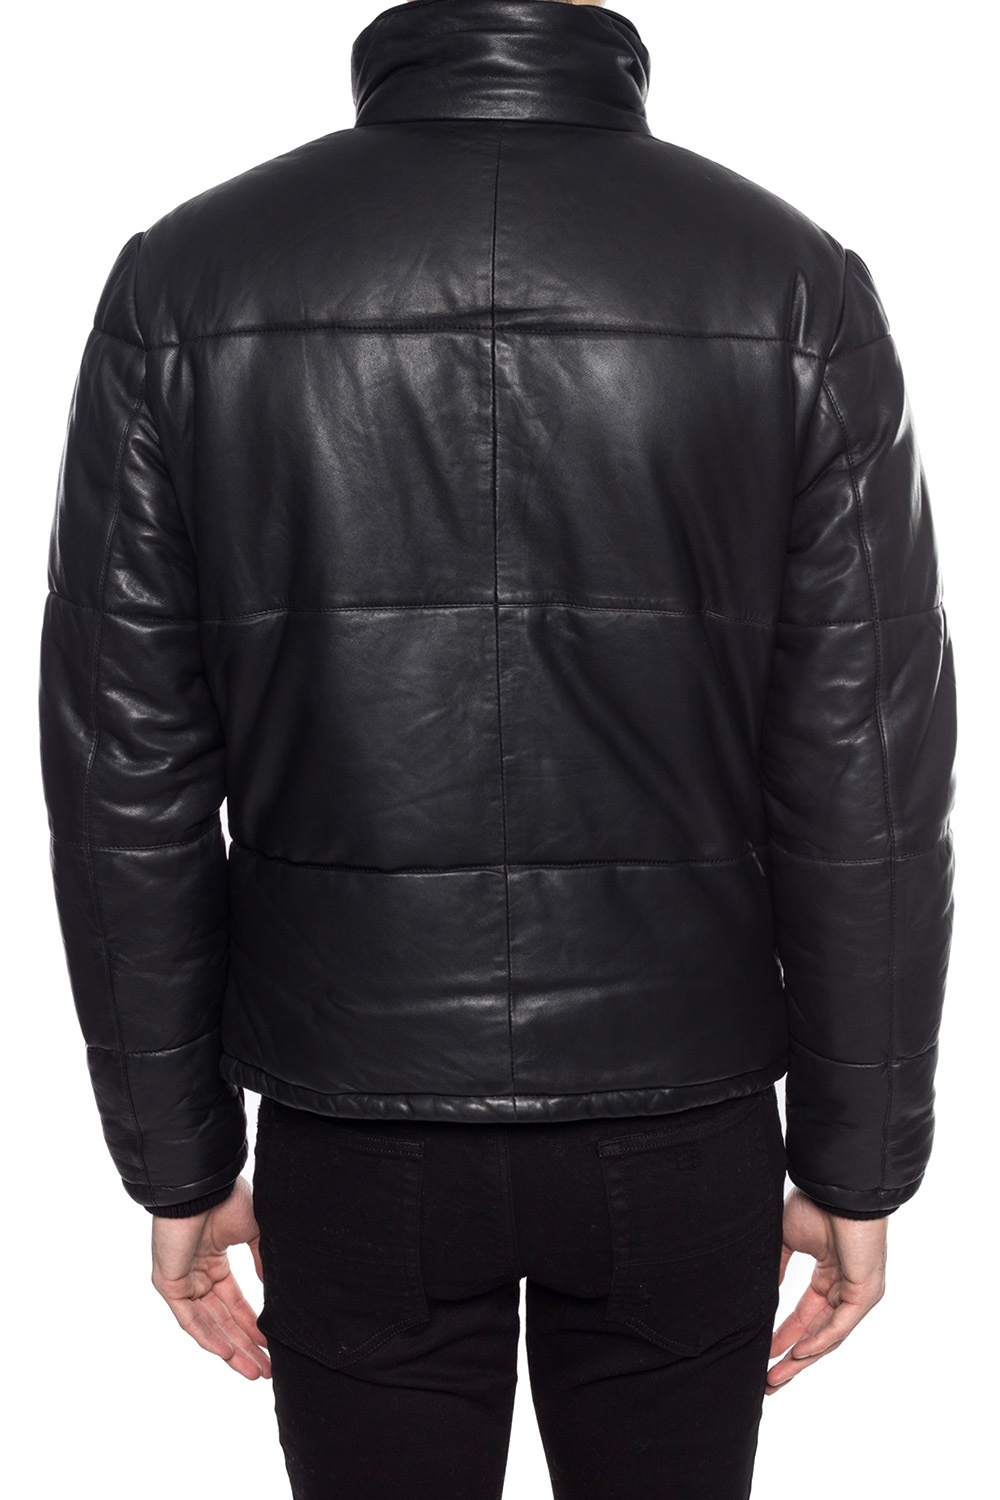 Black 'Coronet' leather jacket AllSaints - Vitkac Canada